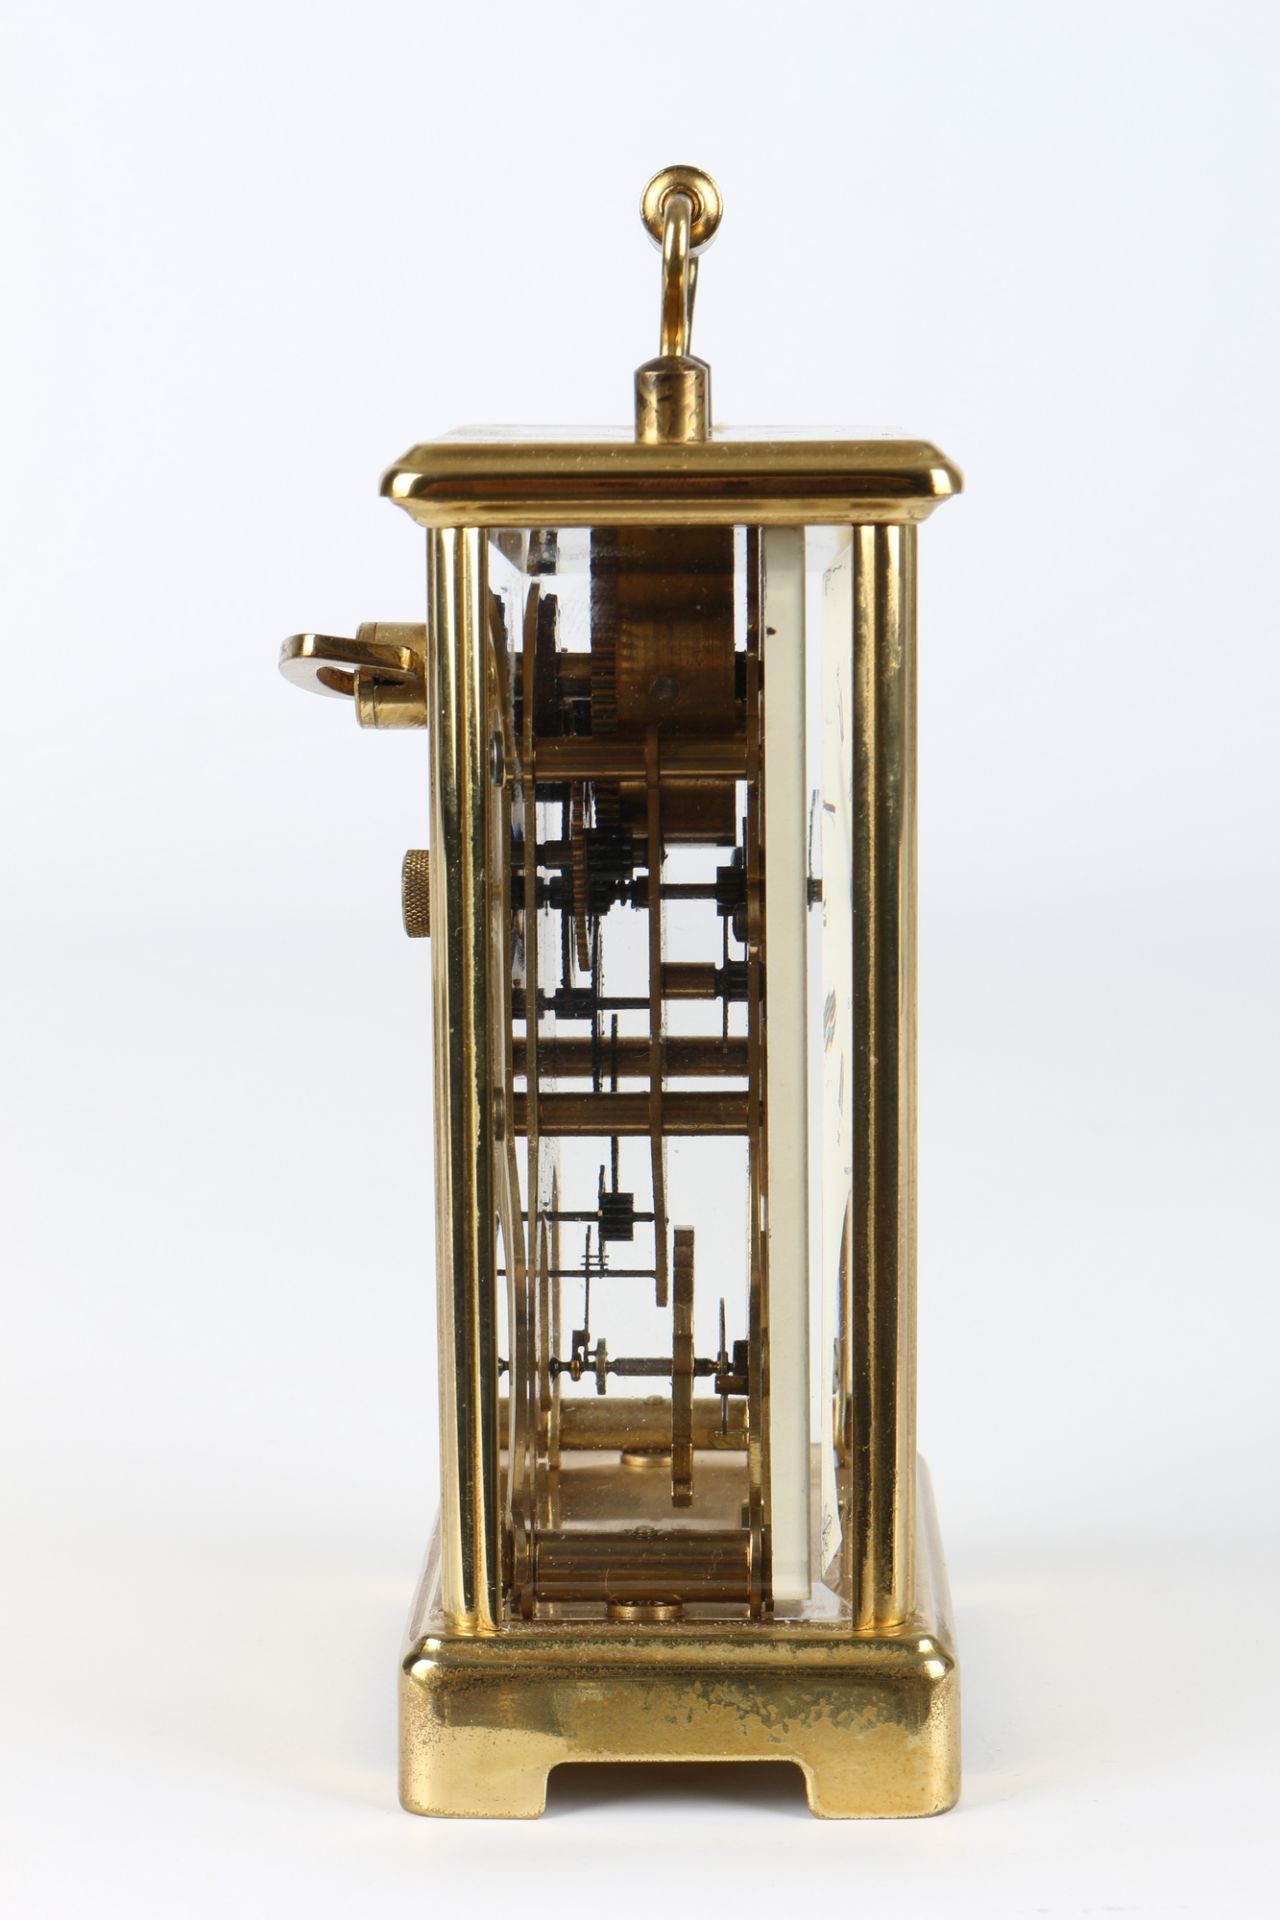 August Schatz Reiseuhr, carriage clock, - Image 3 of 5